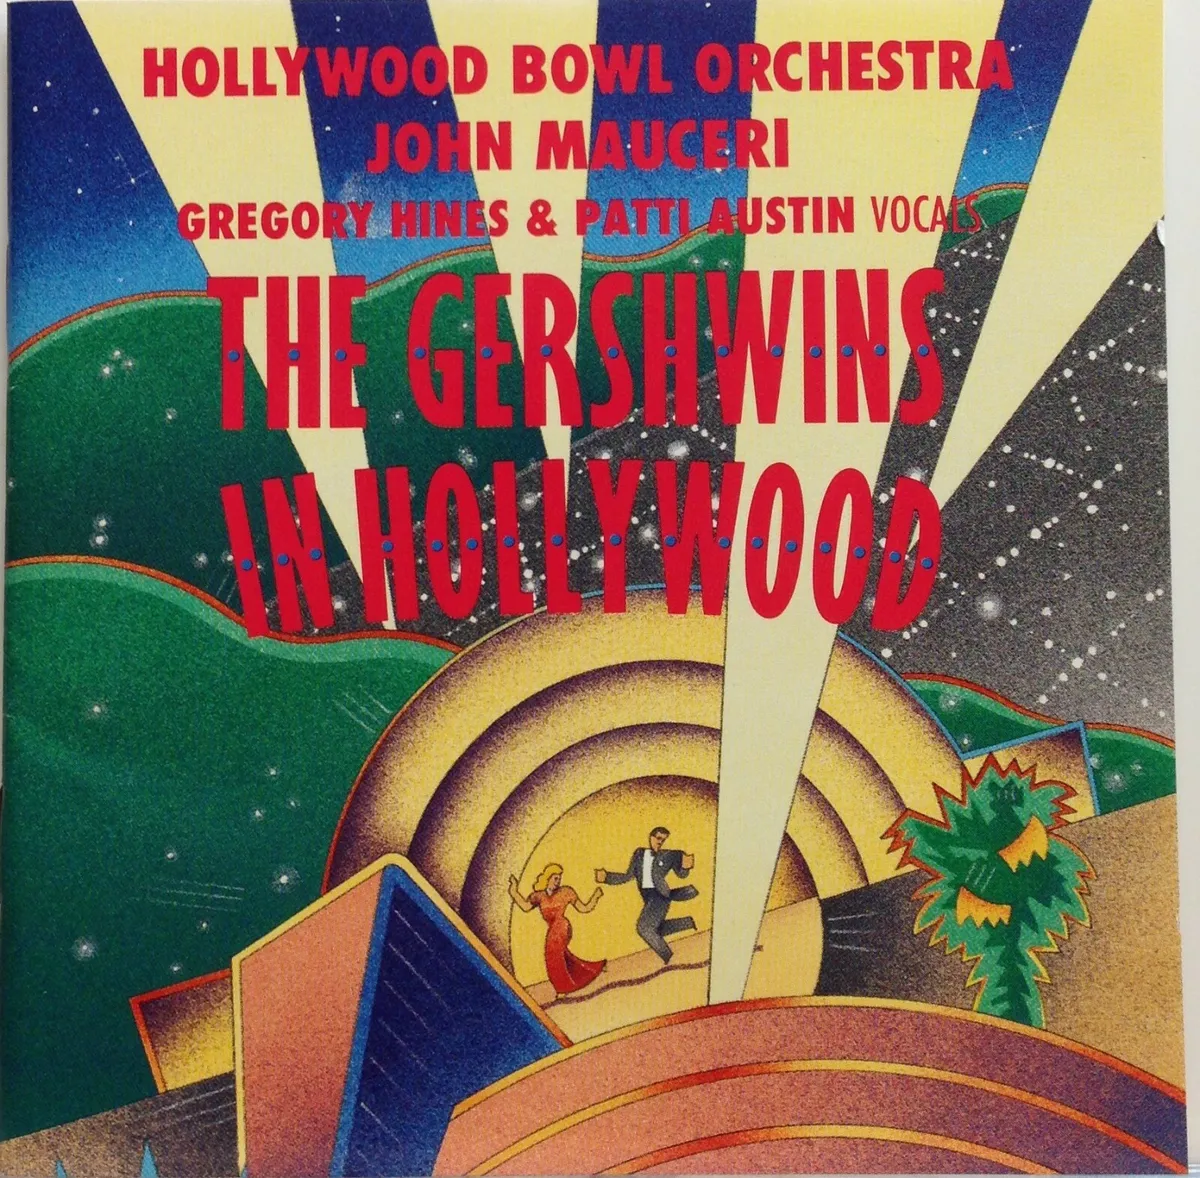 Mauceri Gershwins in Hollywood